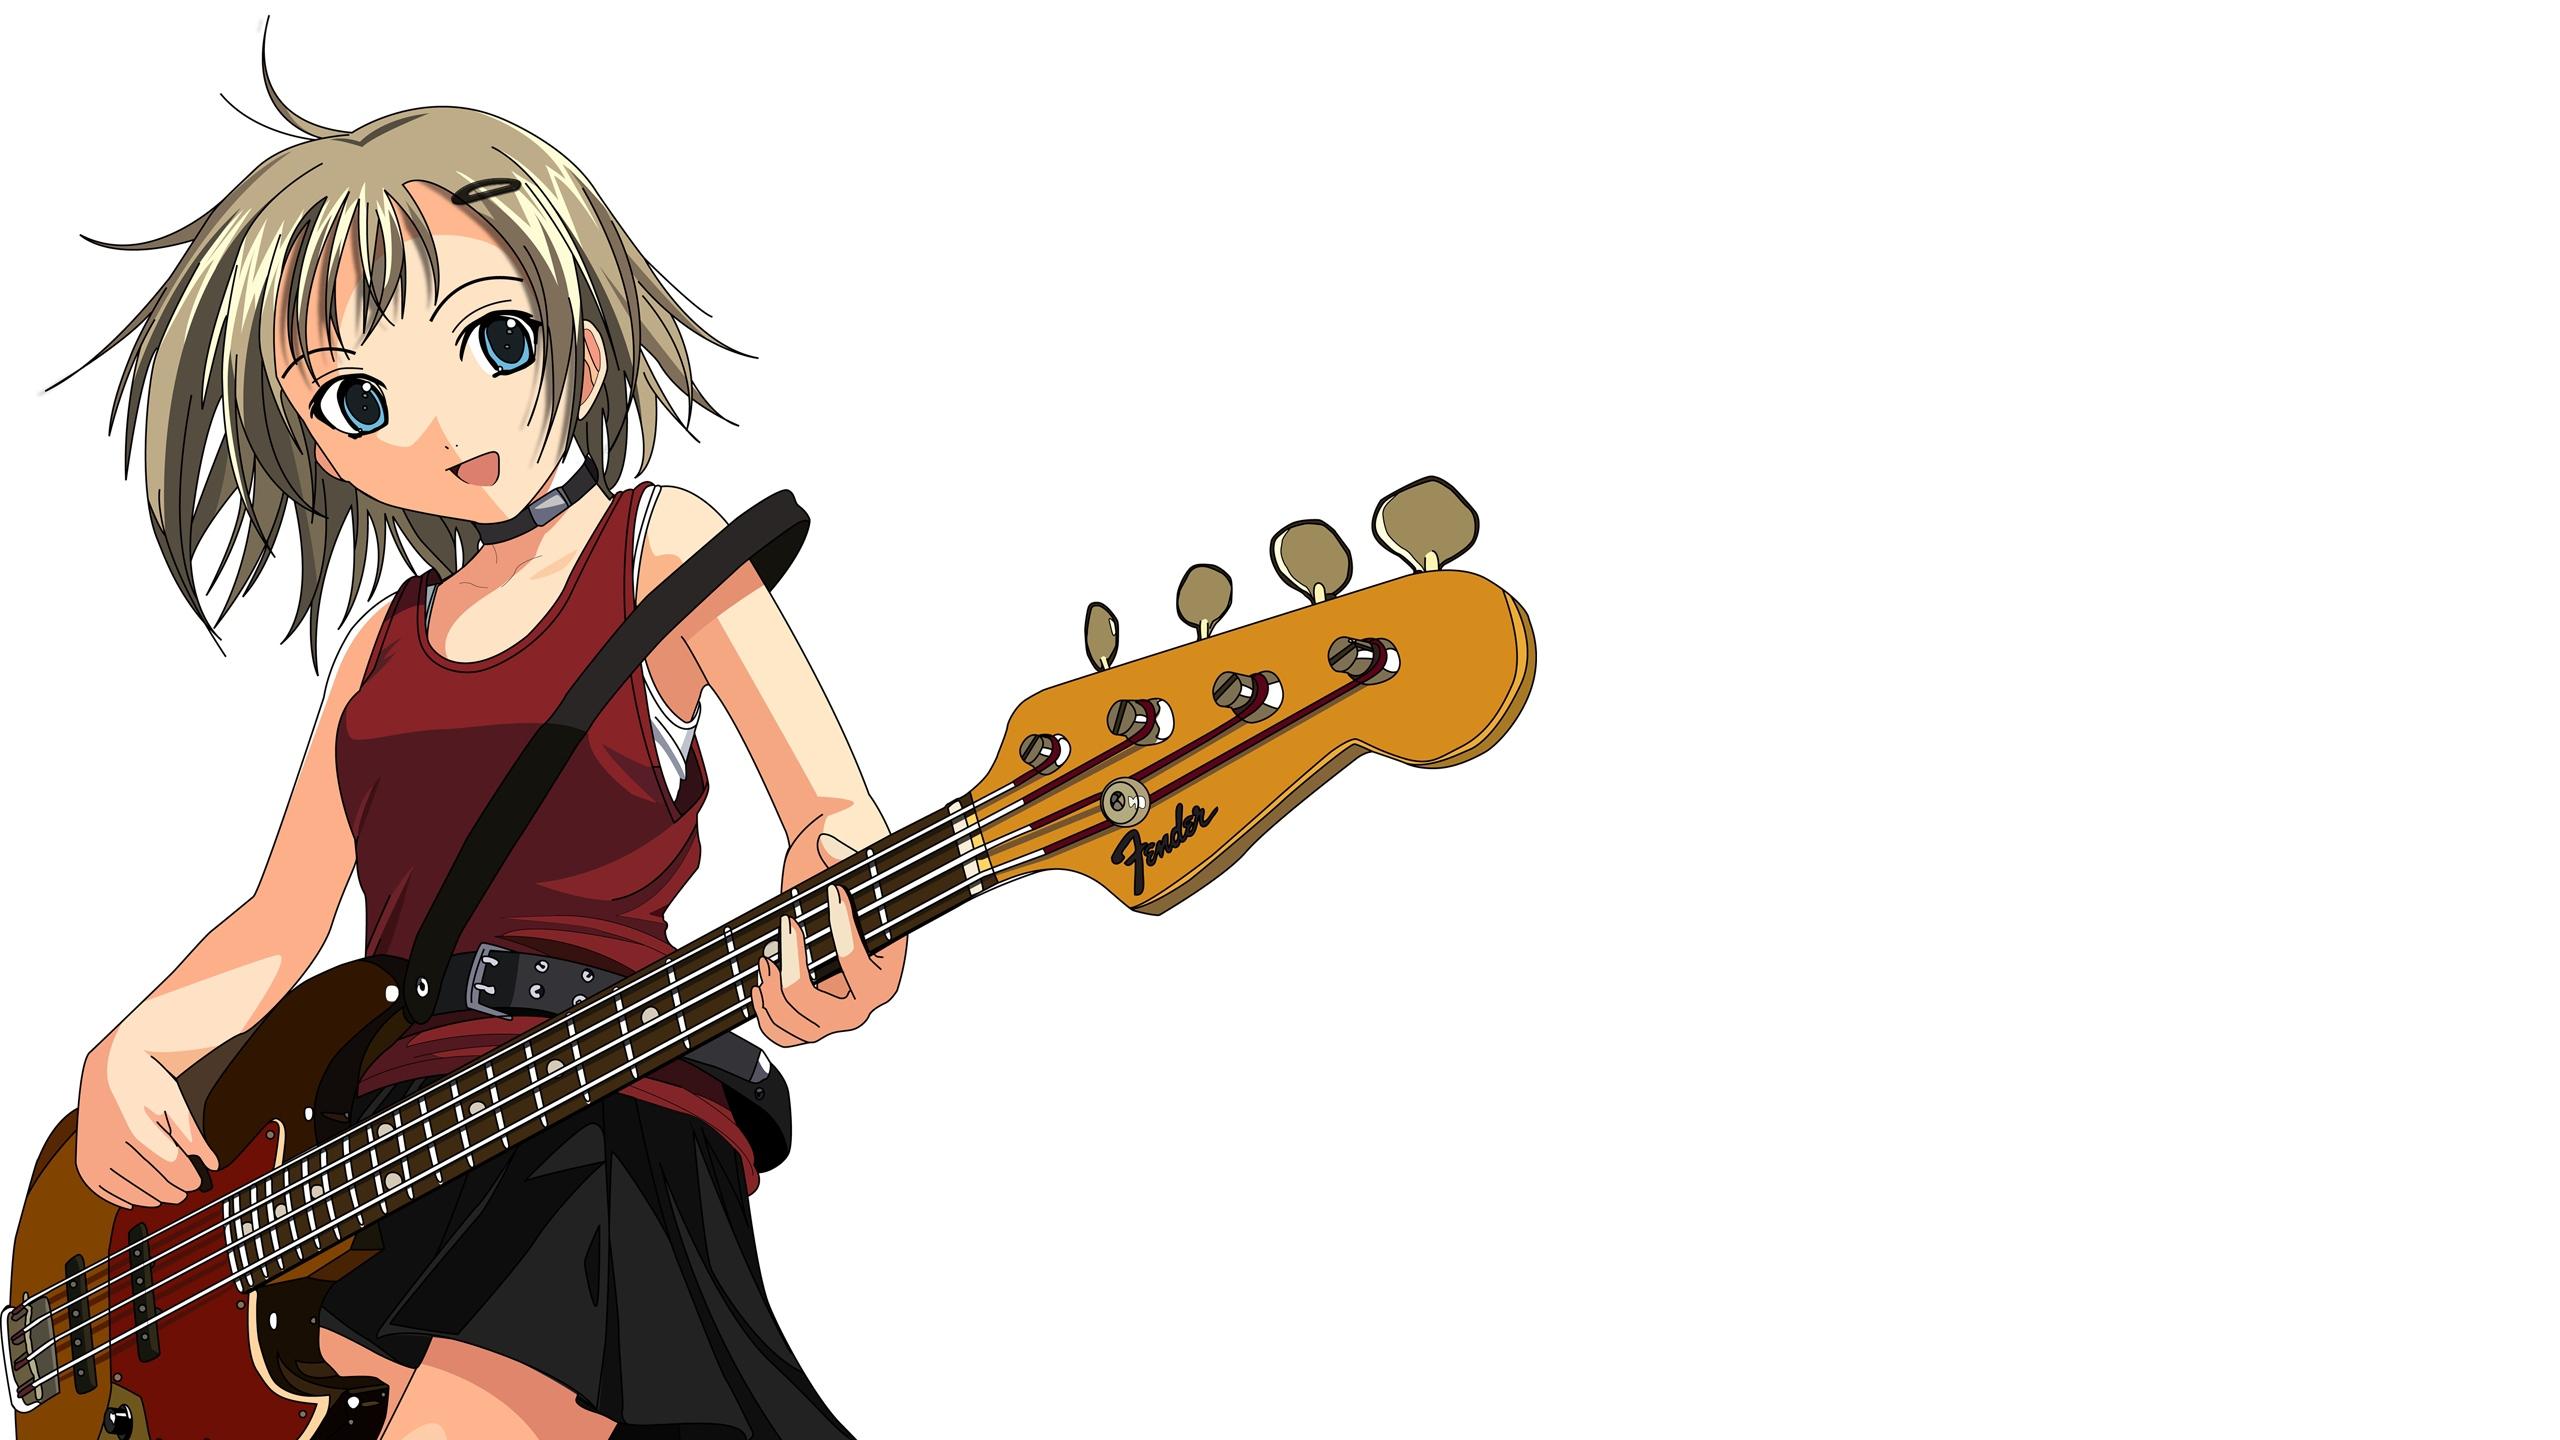 Download wallpaper 2560x1440 anime, girl, guitar, music, fun